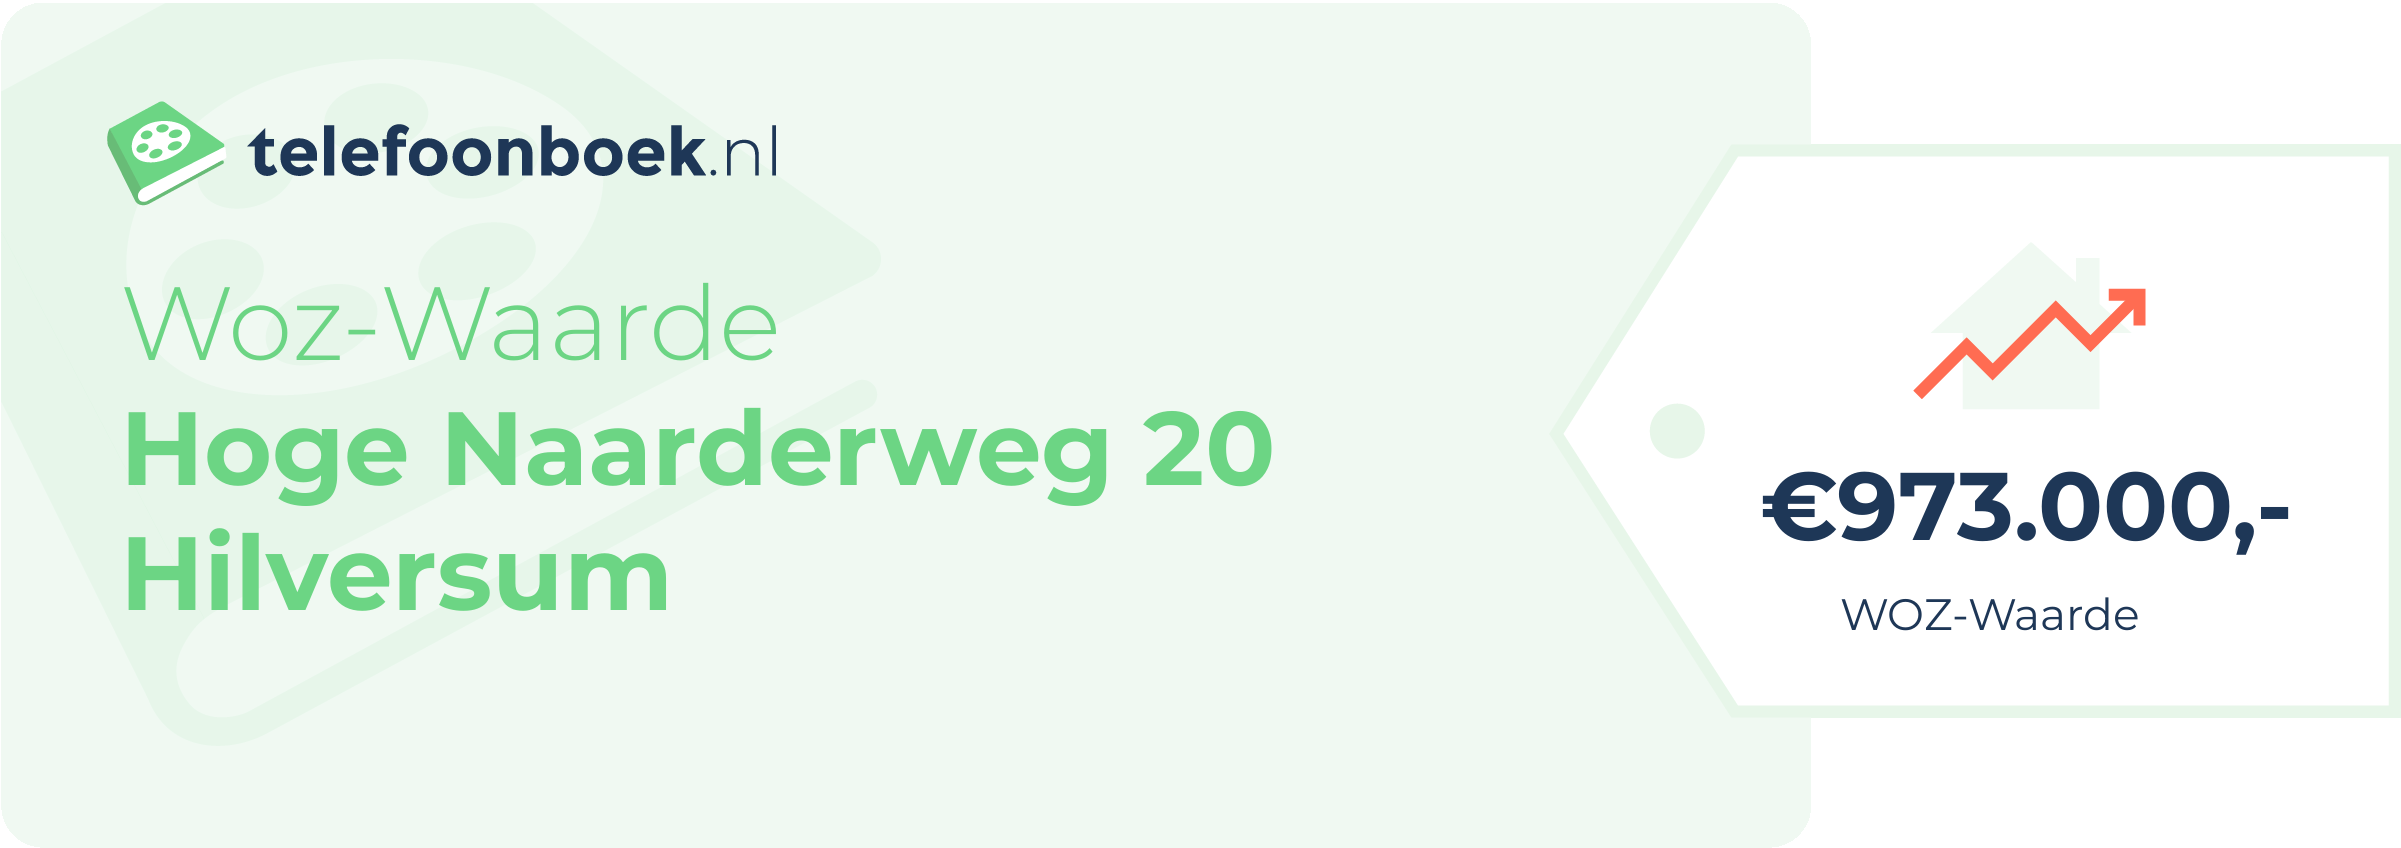 WOZ-waarde Hoge Naarderweg 20 Hilversum